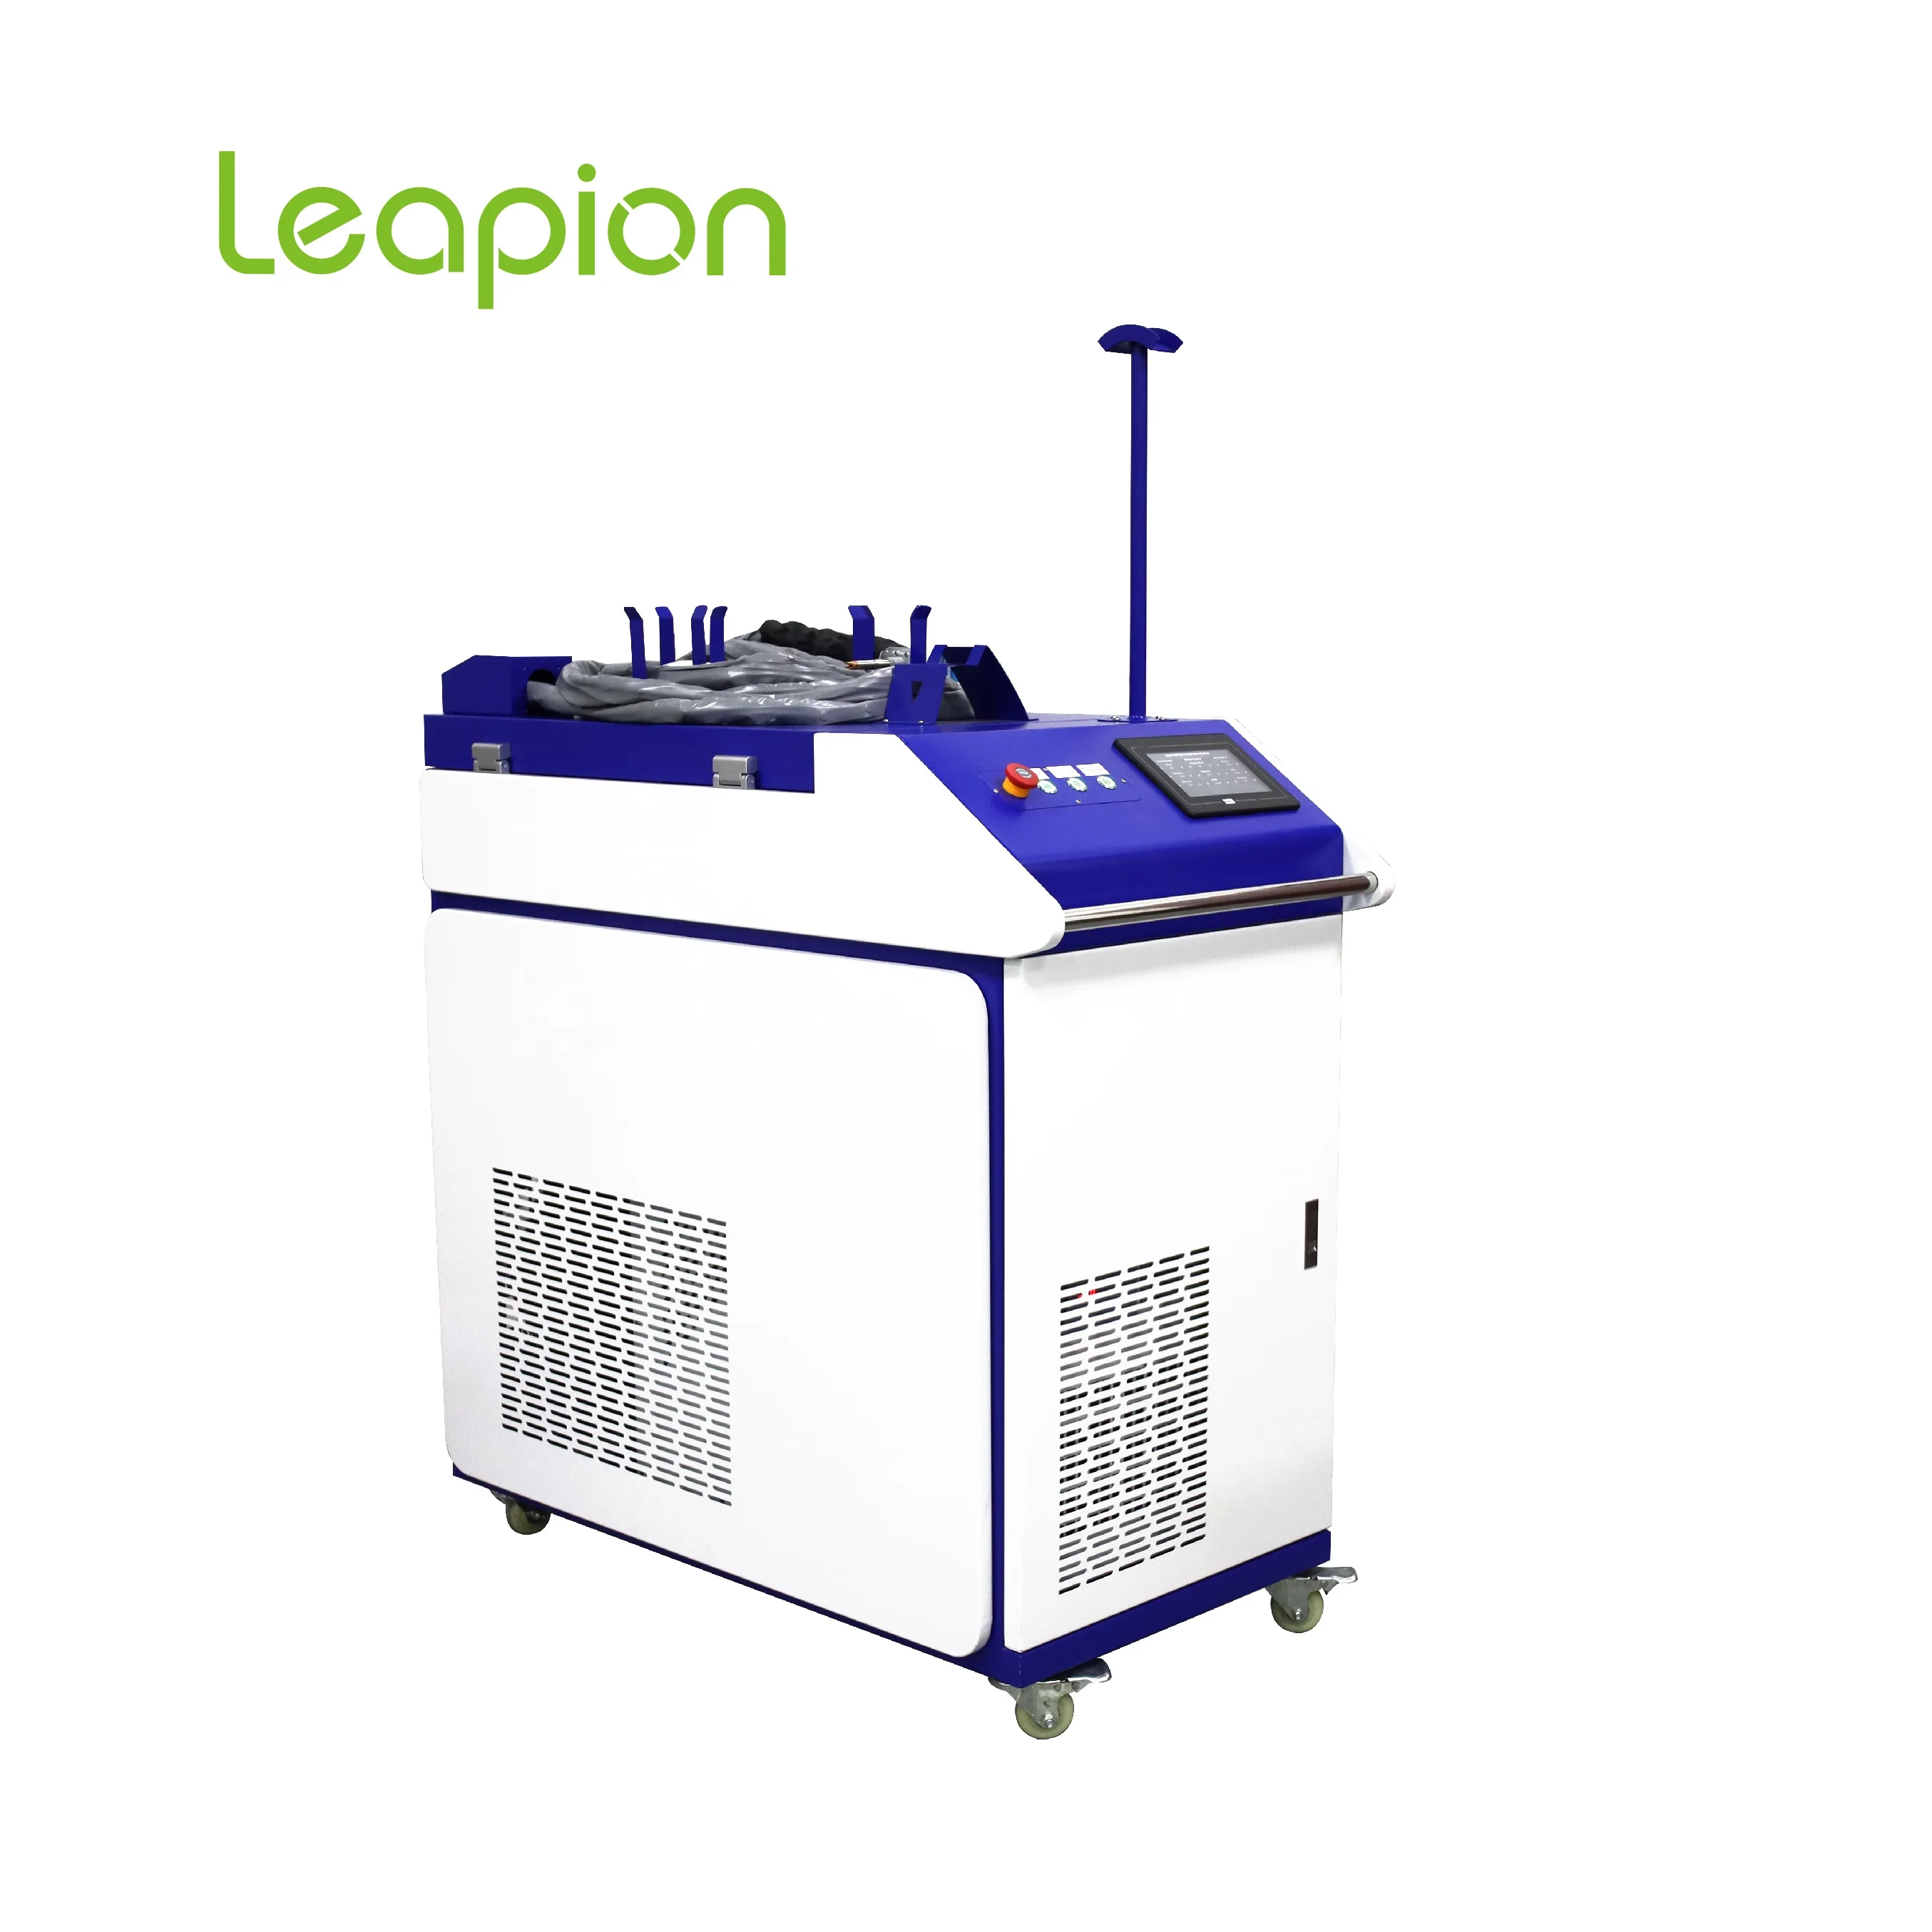 2022 Multifunctional Leapion Fiber Laser Welder 1000w 1500w Portable Laser Welding Machine with Great Price